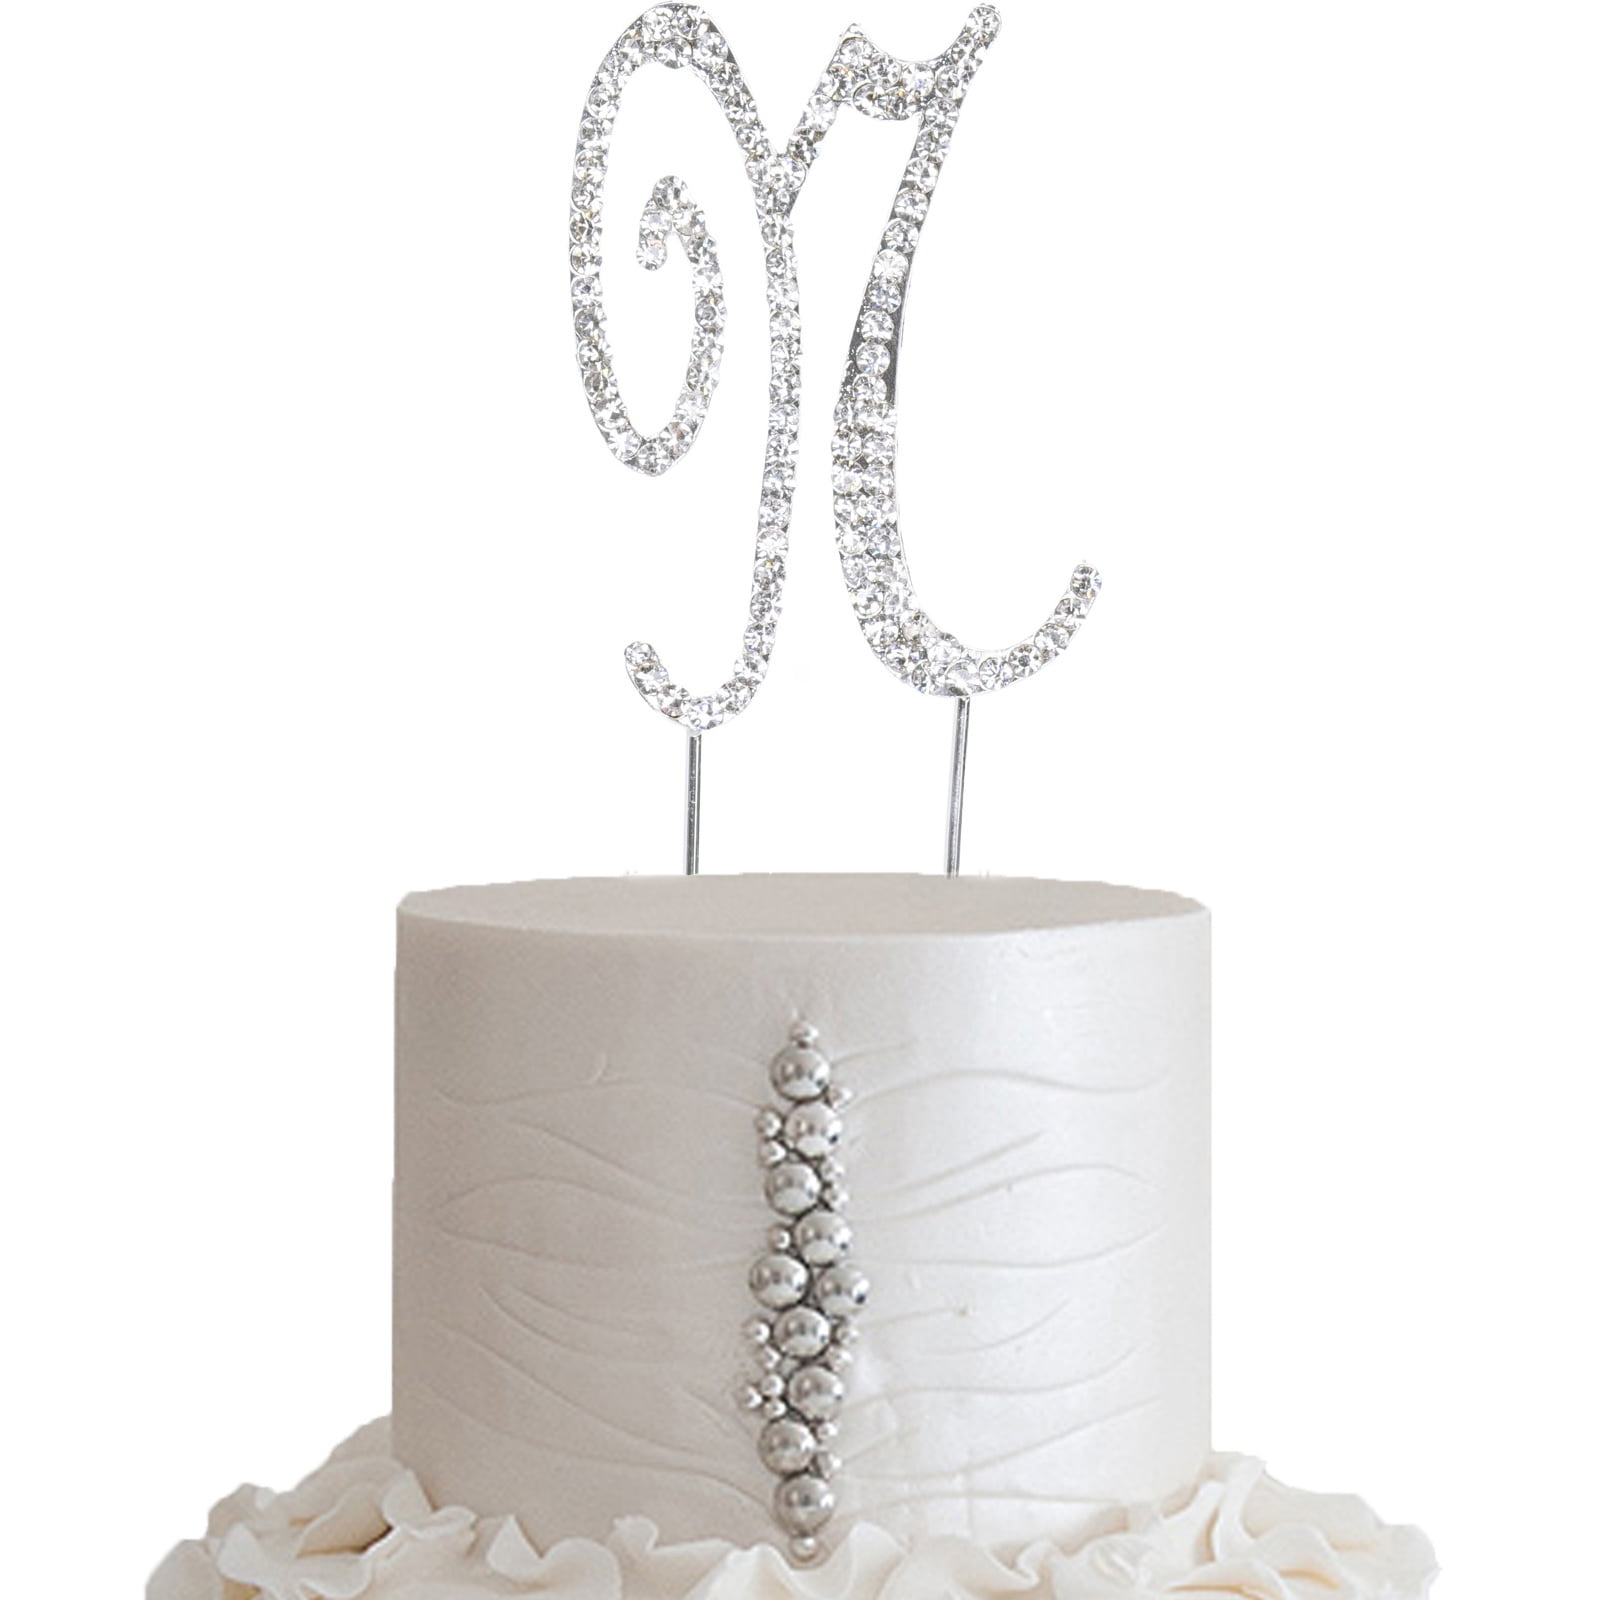 Rhinestone Cake Topper D Monogram Letter Wedding Cake Jewelry WEDDING CAKE 